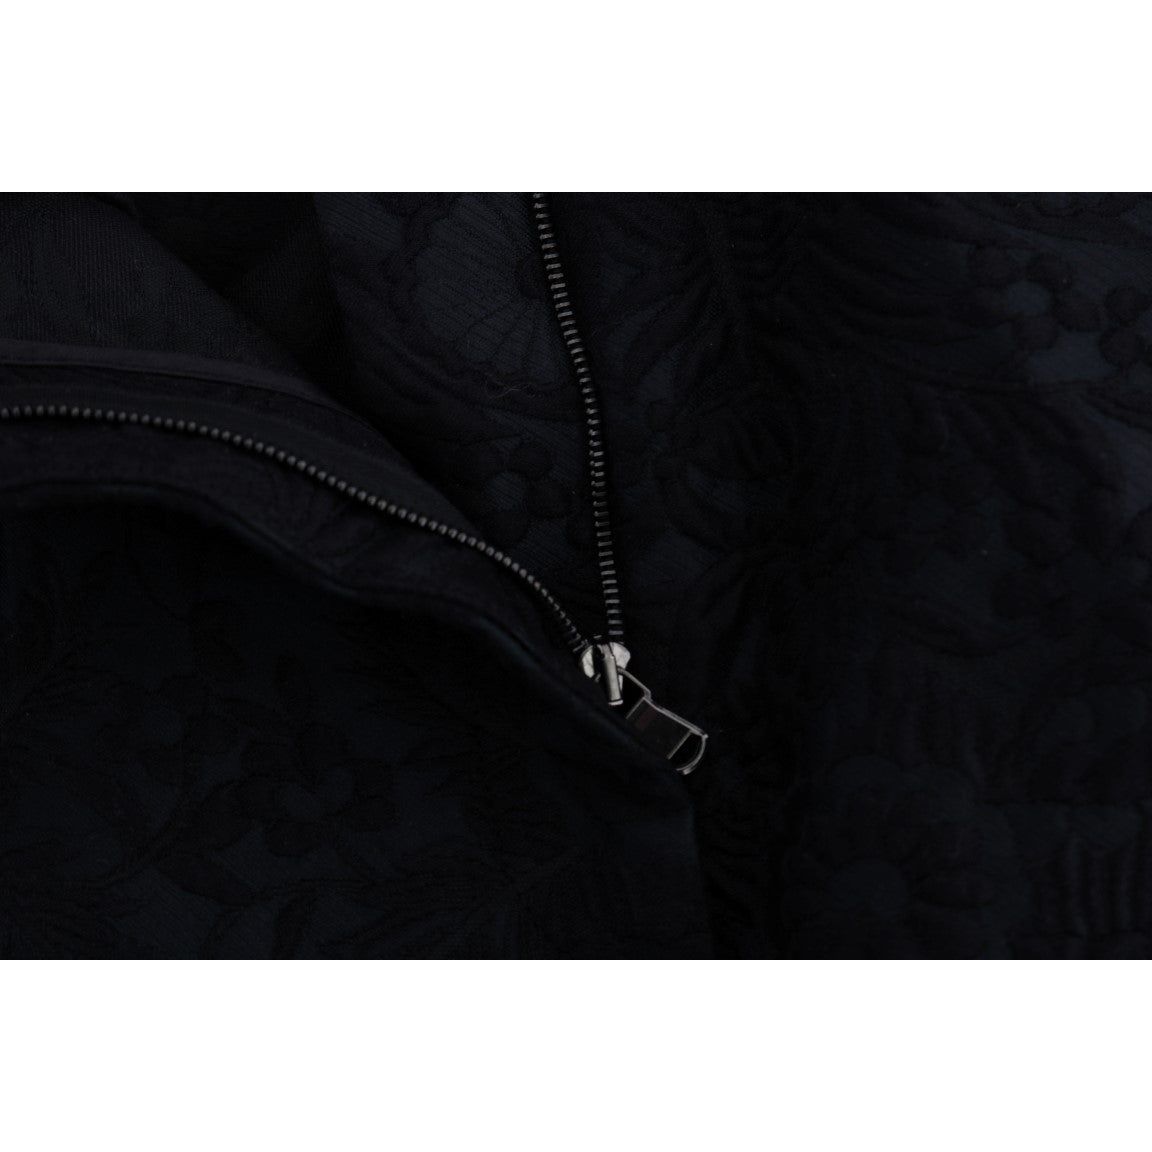 Dolce & Gabbana Elegant Floral Brocade Dress Shorts black-brocade-high-waist-capri-shorts Jeans & Pants 513087-black-brocade-high-waist-capri-shorts-4.jpg